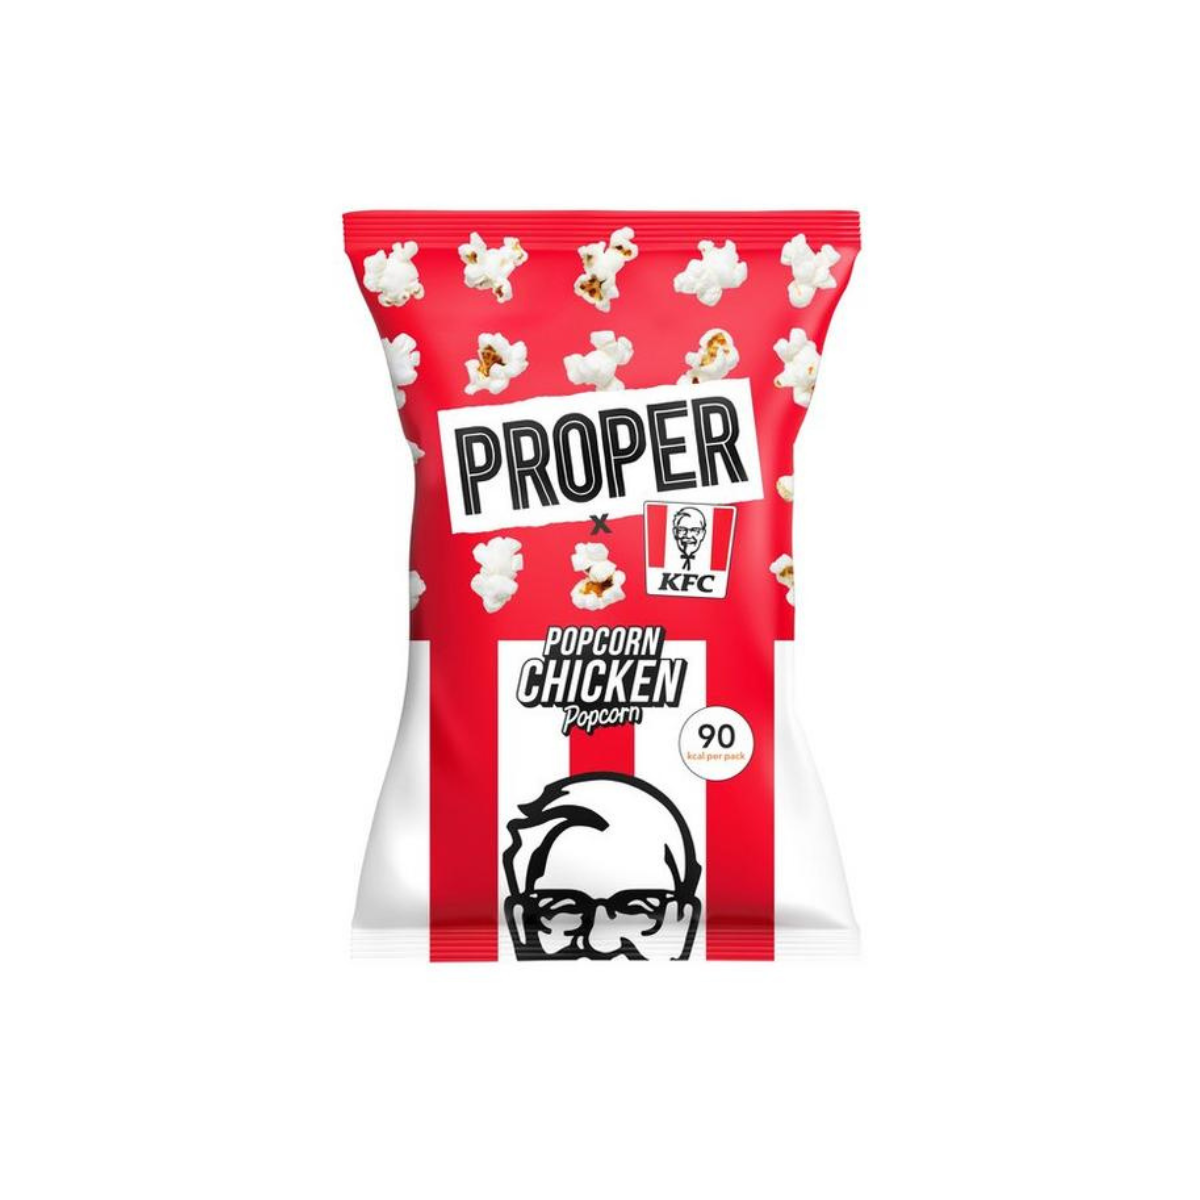 Proper Vegan KFC Popcorn Chicken Limited Edition 20g - Crunchy Plant-Based Delight